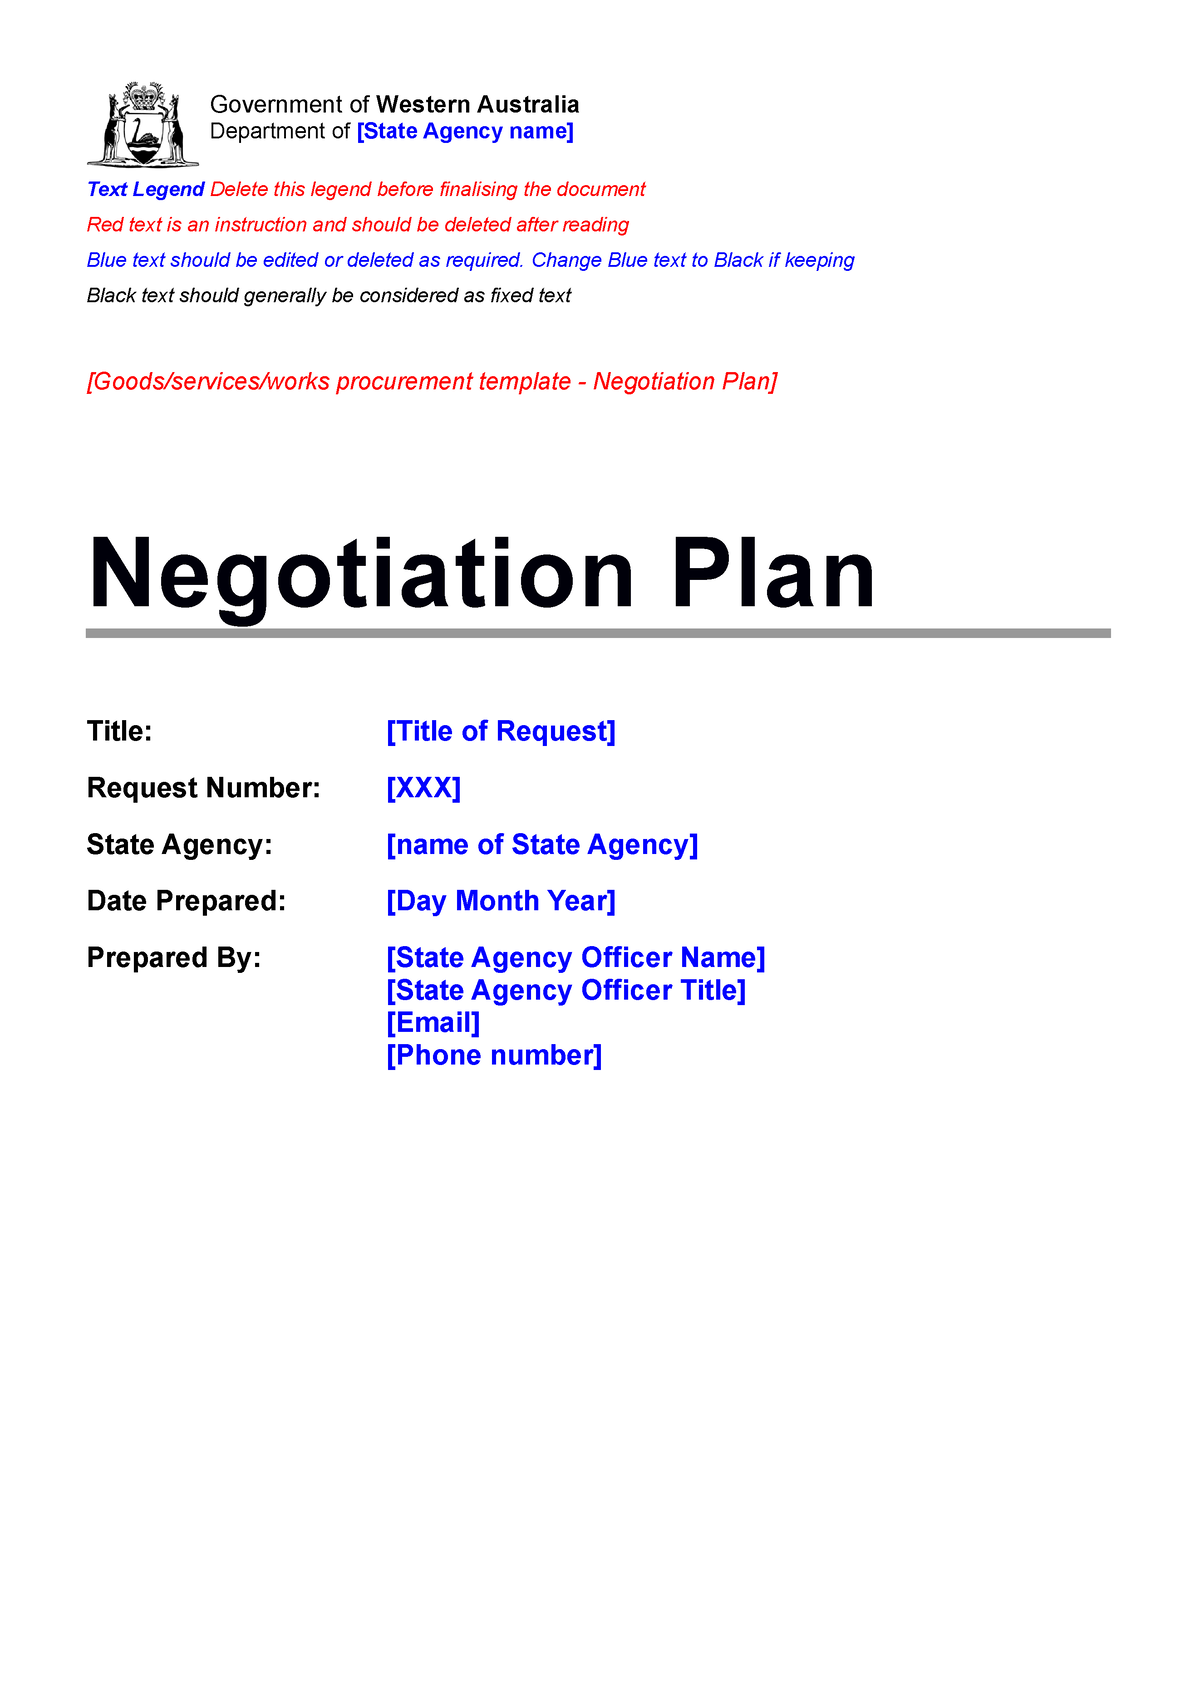 Template Negotiation Plan 13072021 VVVAnswersAnswersAnswersAnswers